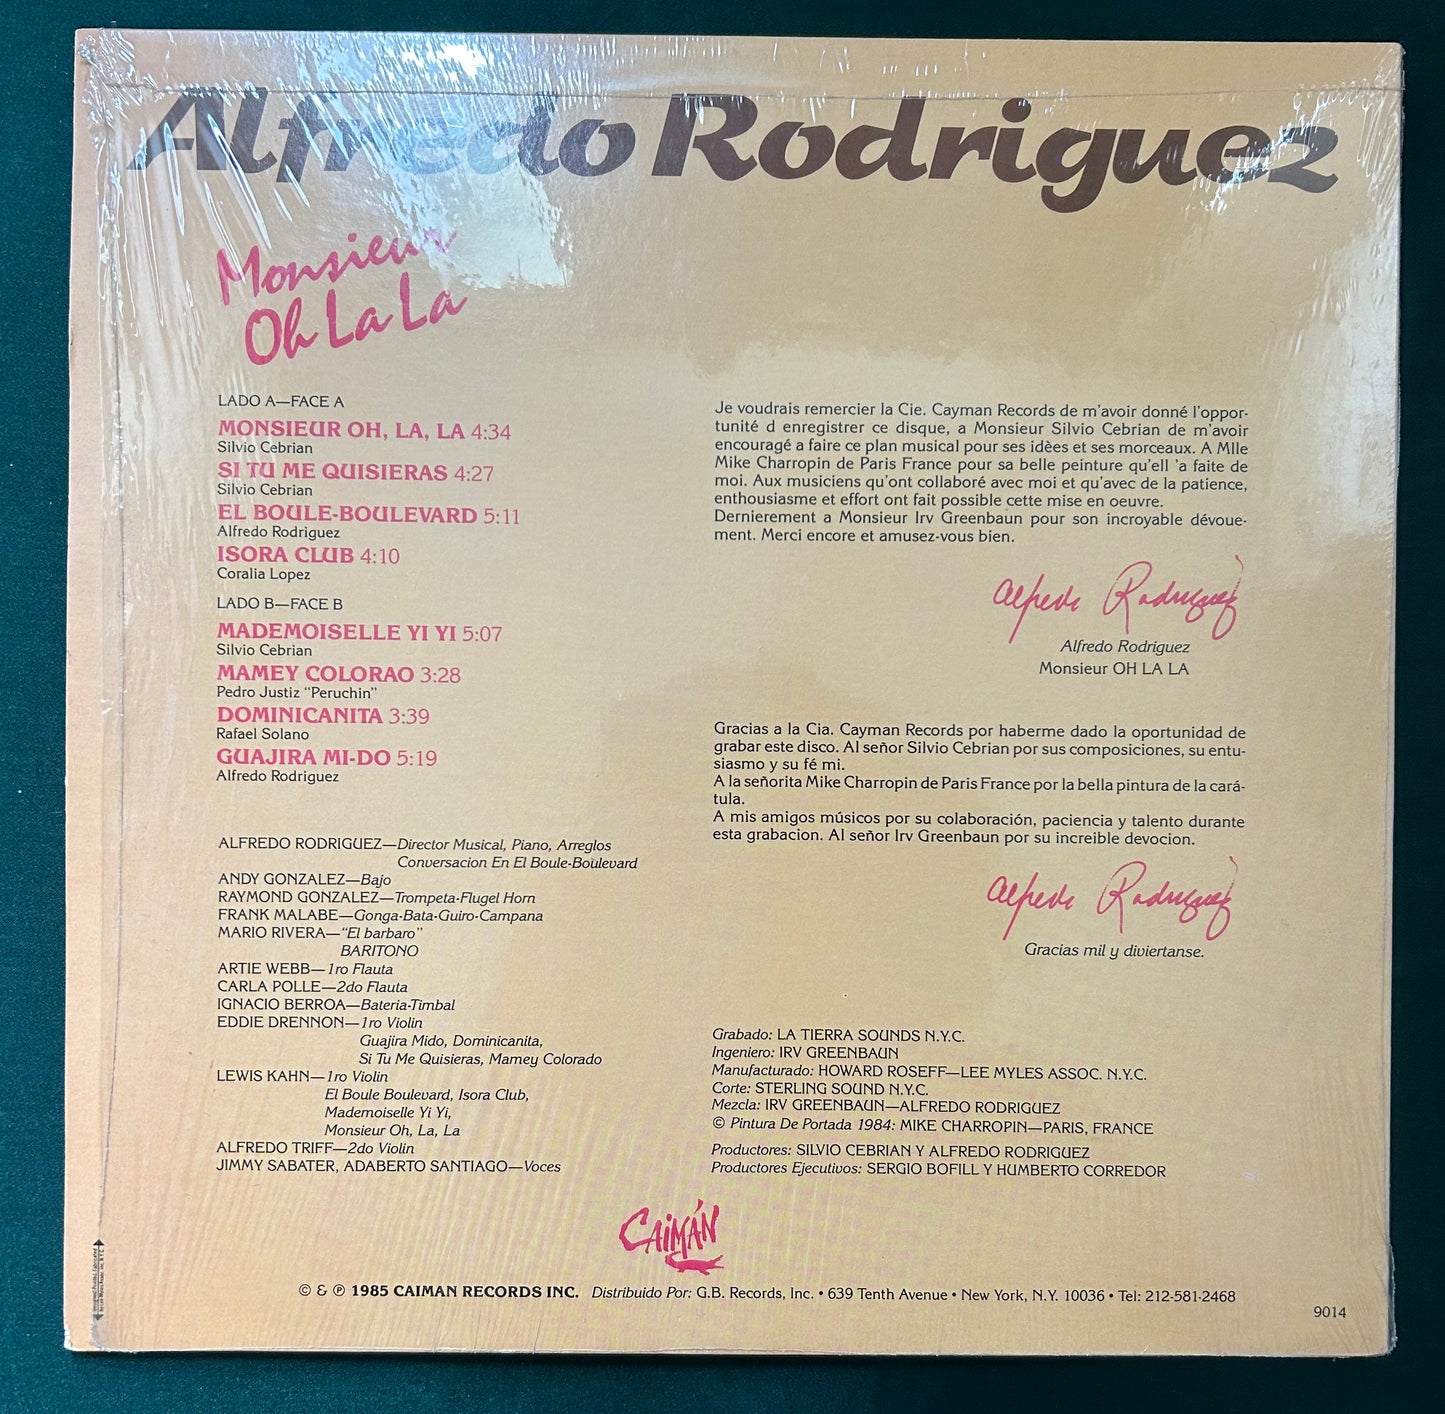 Alfredo Rodriguez - Monsieur Oh La La 1985 Caiman Salsa